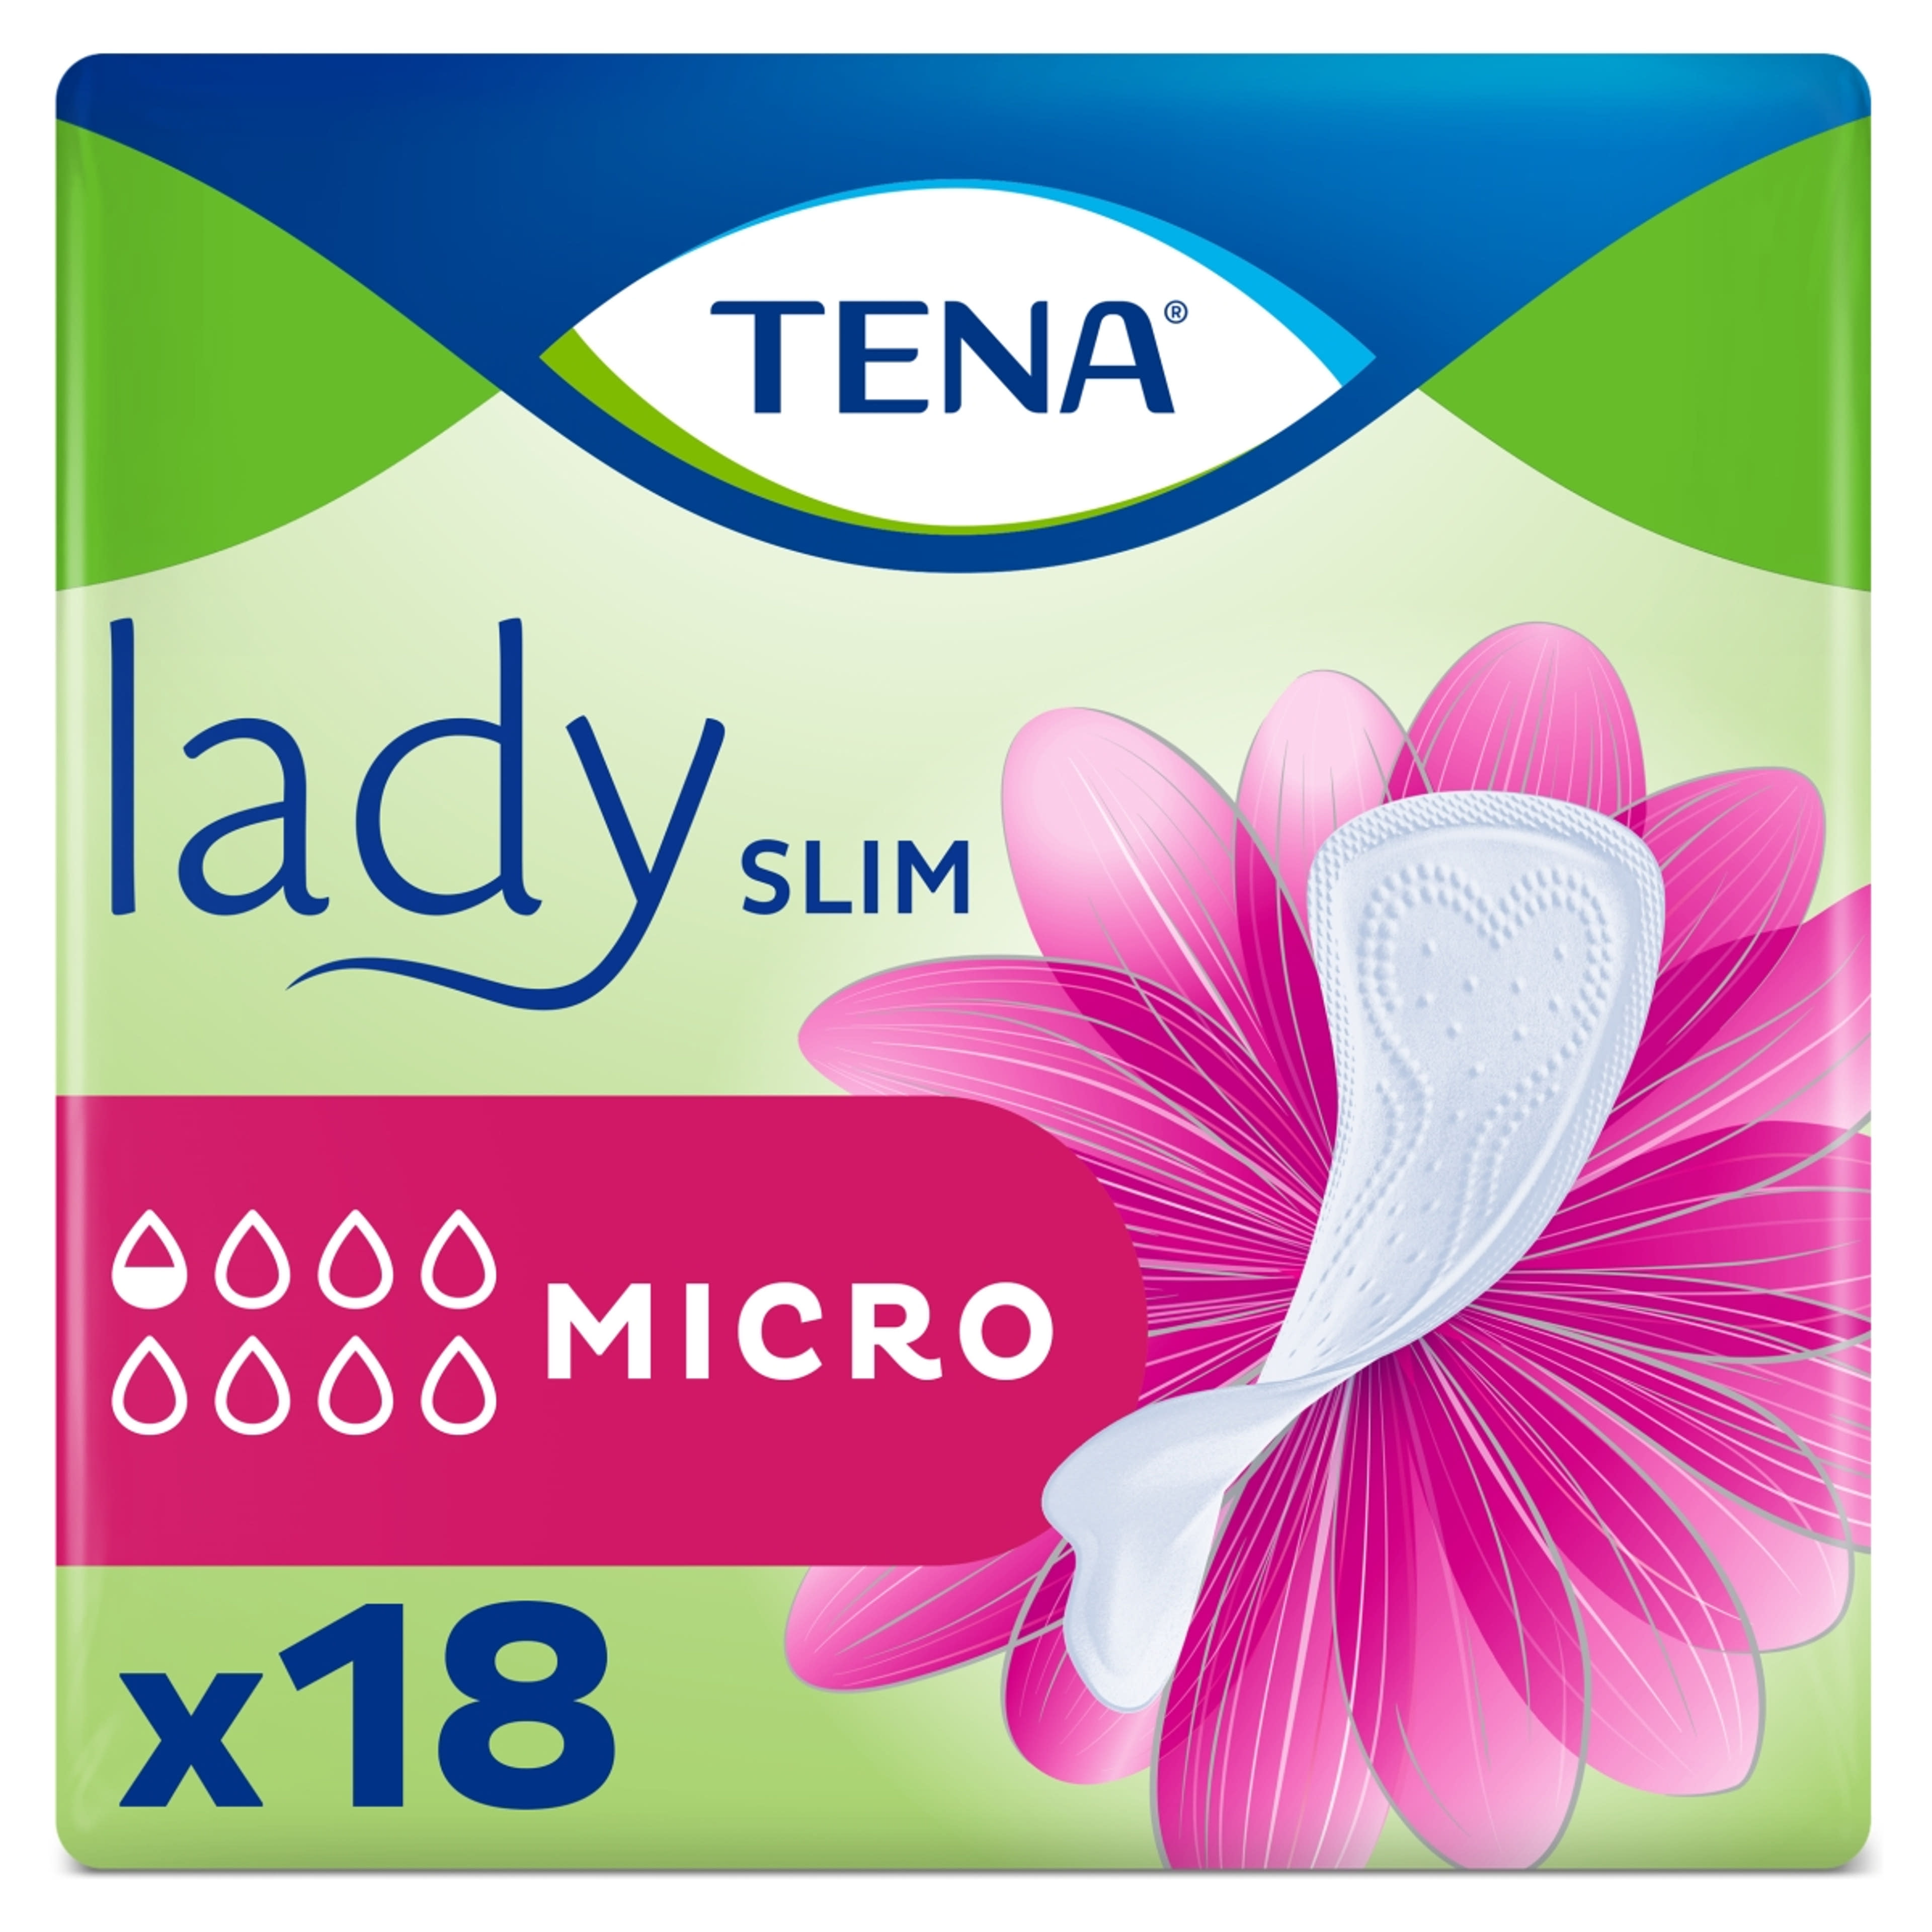 Tena Lady inkontinencia slim micro - 18 db-3